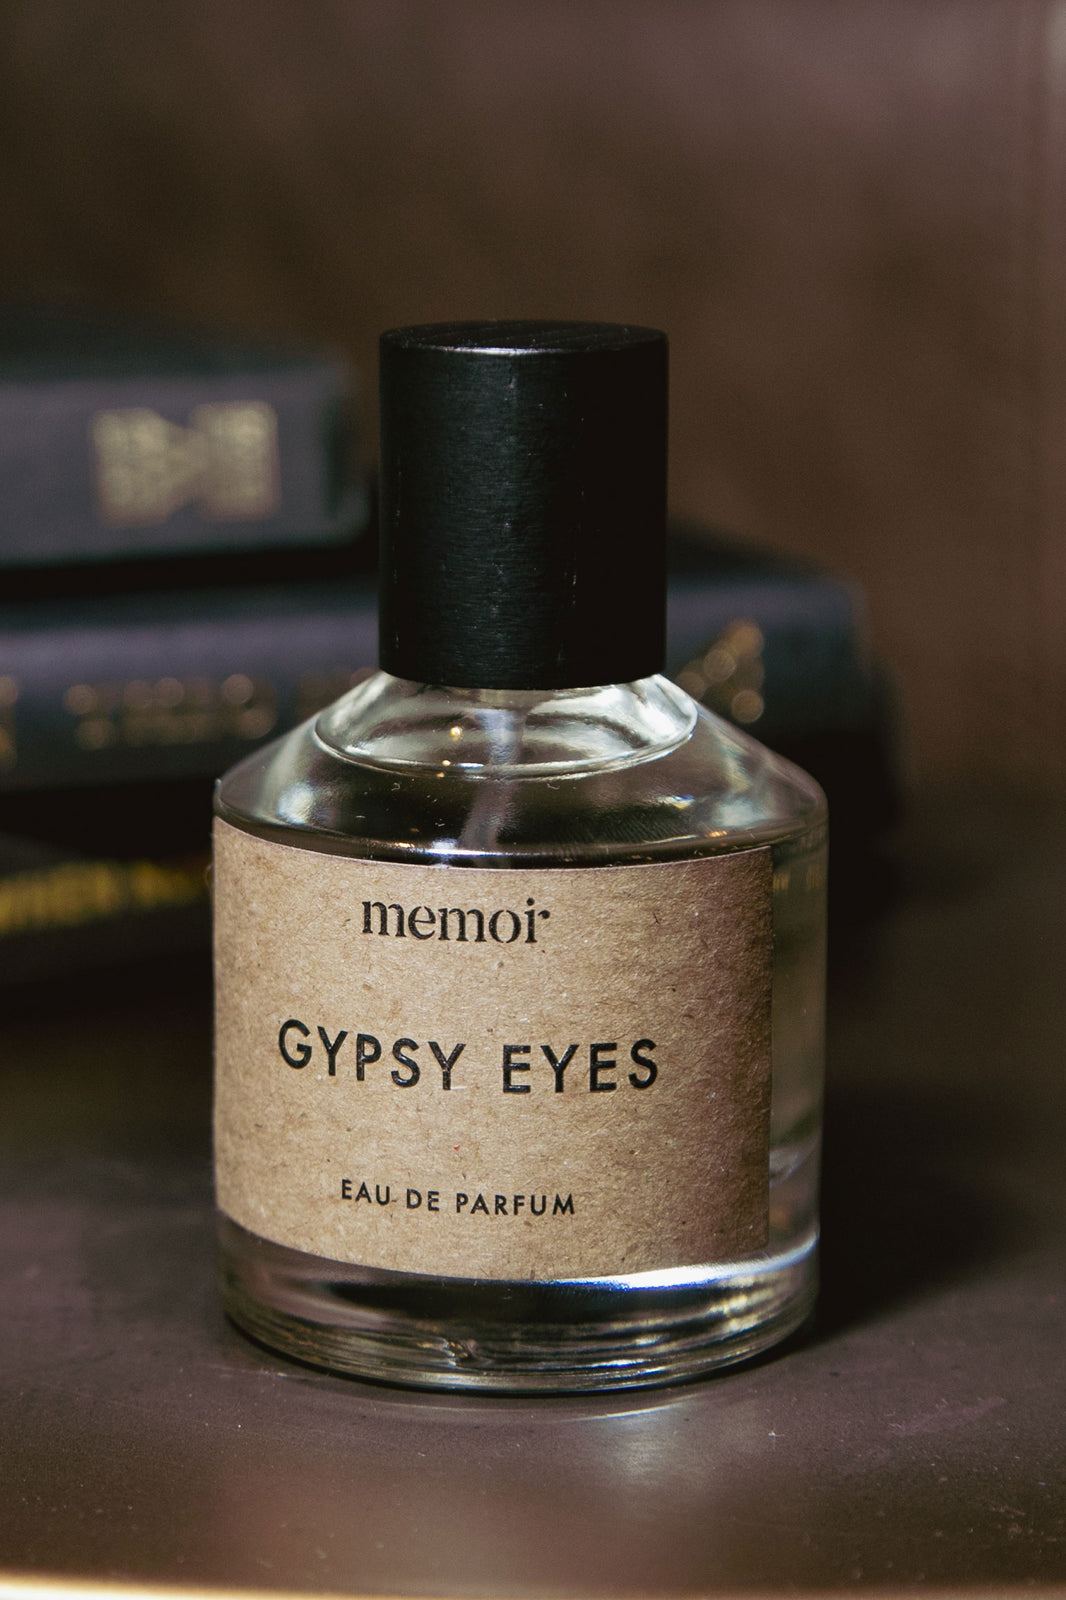 Memoir “Gypsy Eyes”